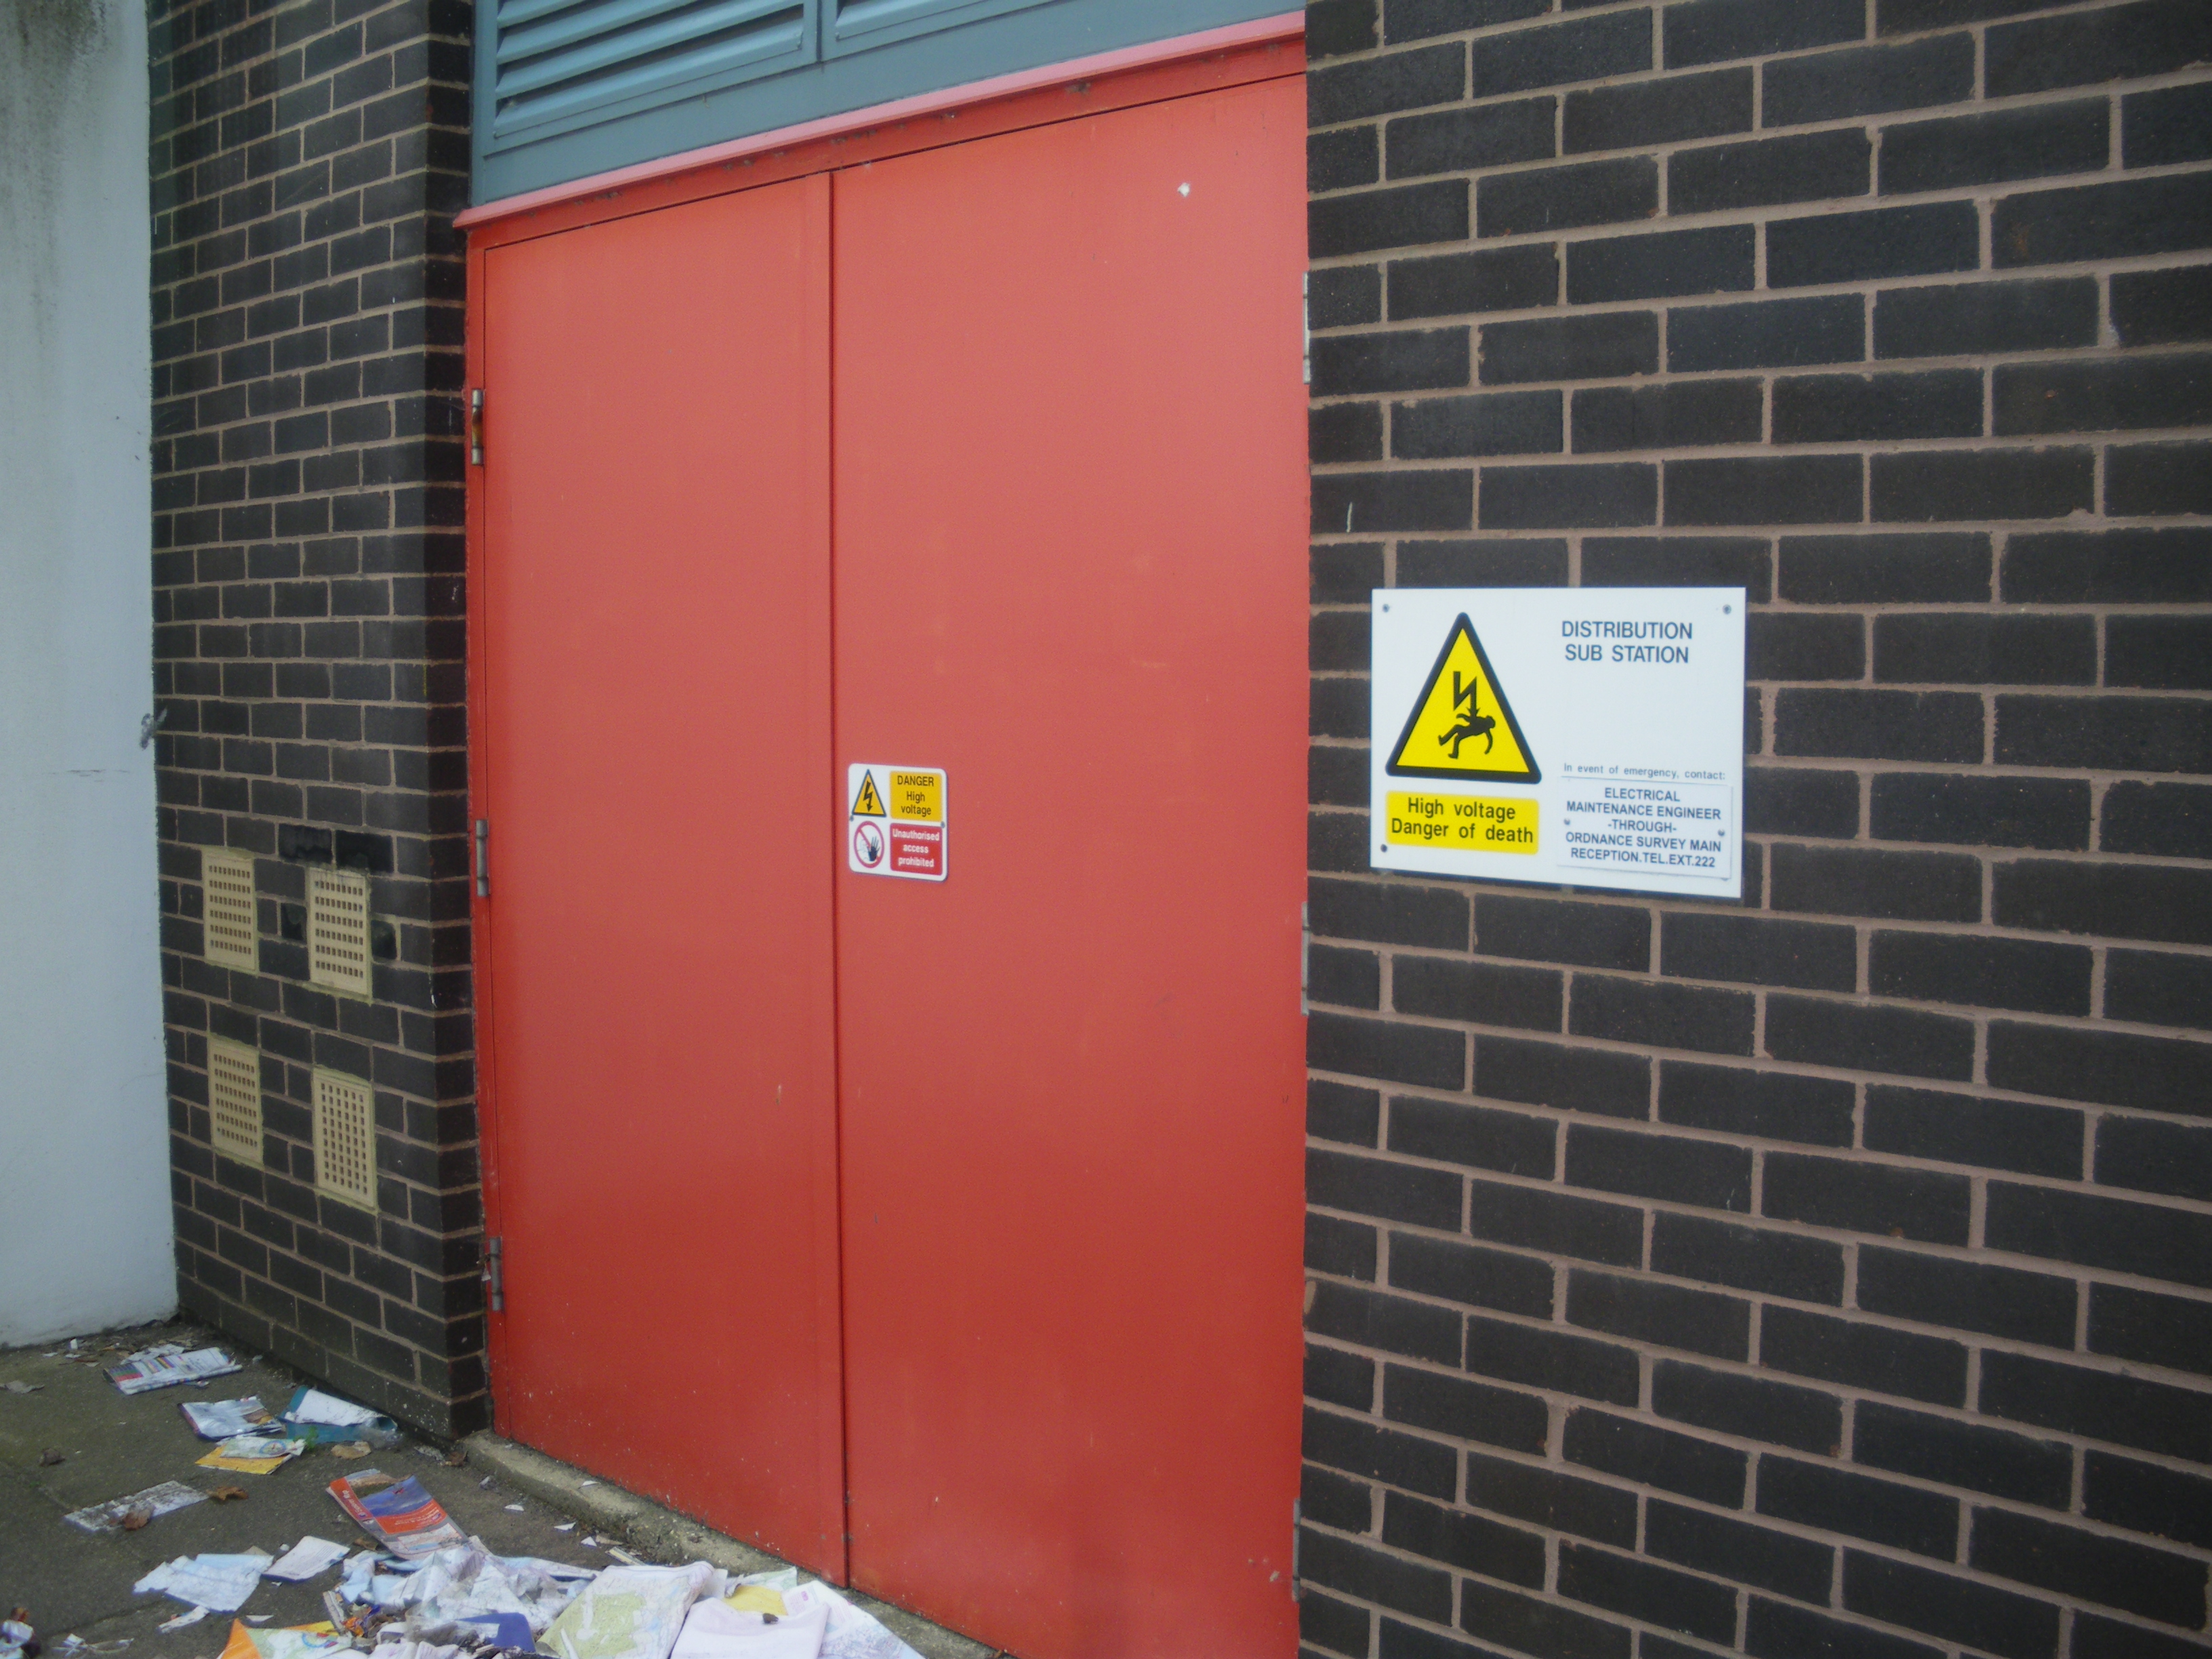 Substation fire escape door